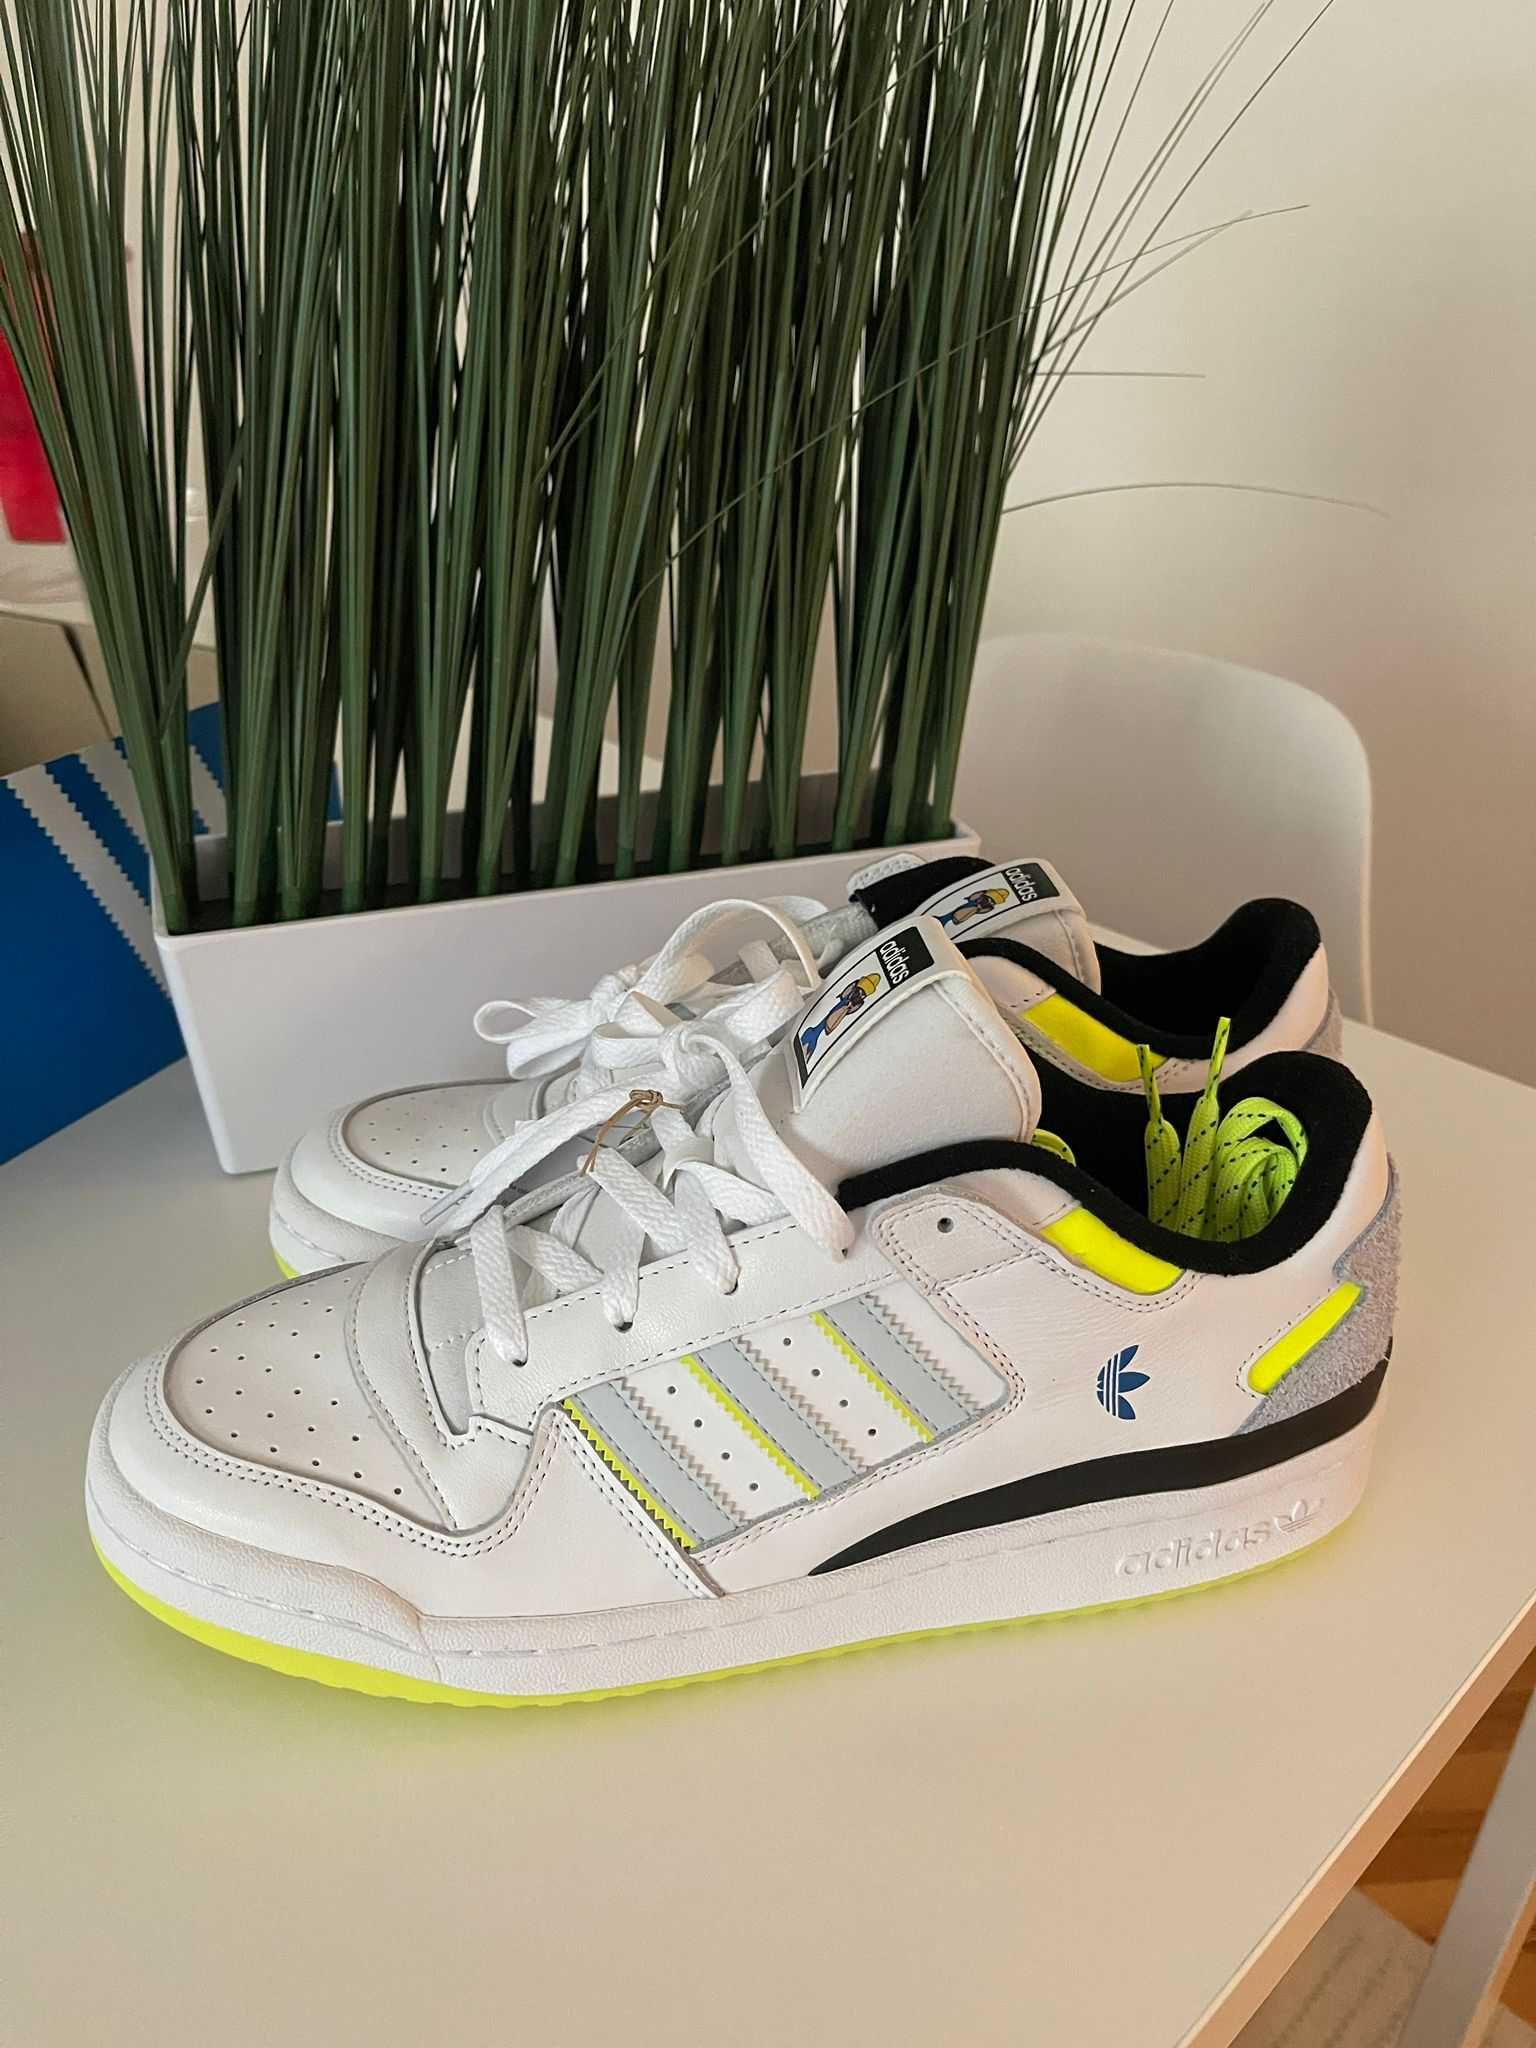 Adidas Forum Low CL x NFT Indigo Herz shoes 44 2/3